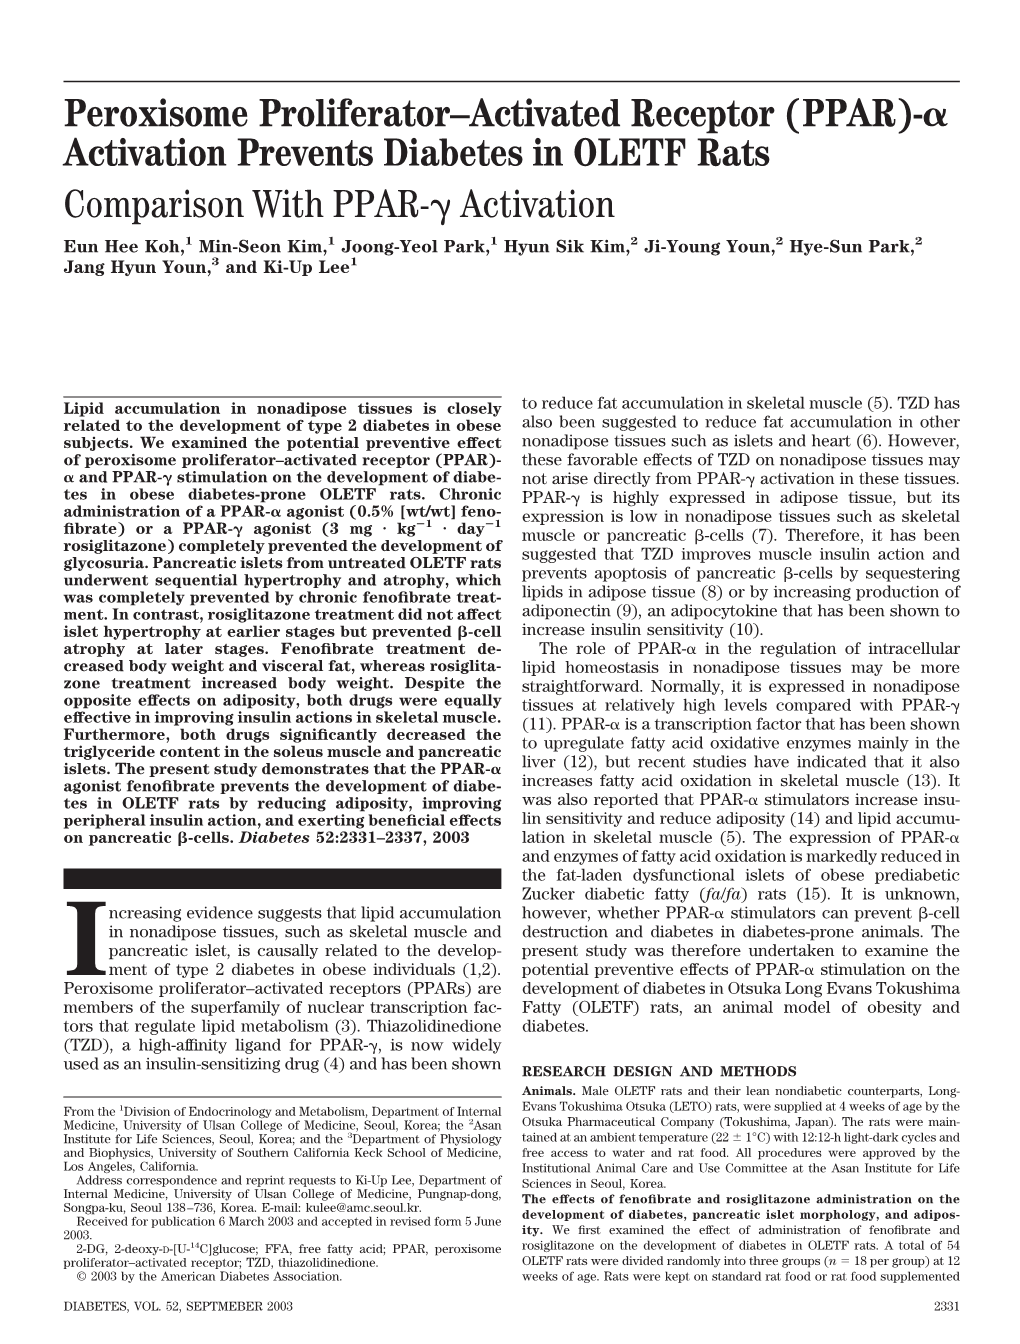 Activation Prevents Diabetes in OLETF Rats Comparison with PPAR